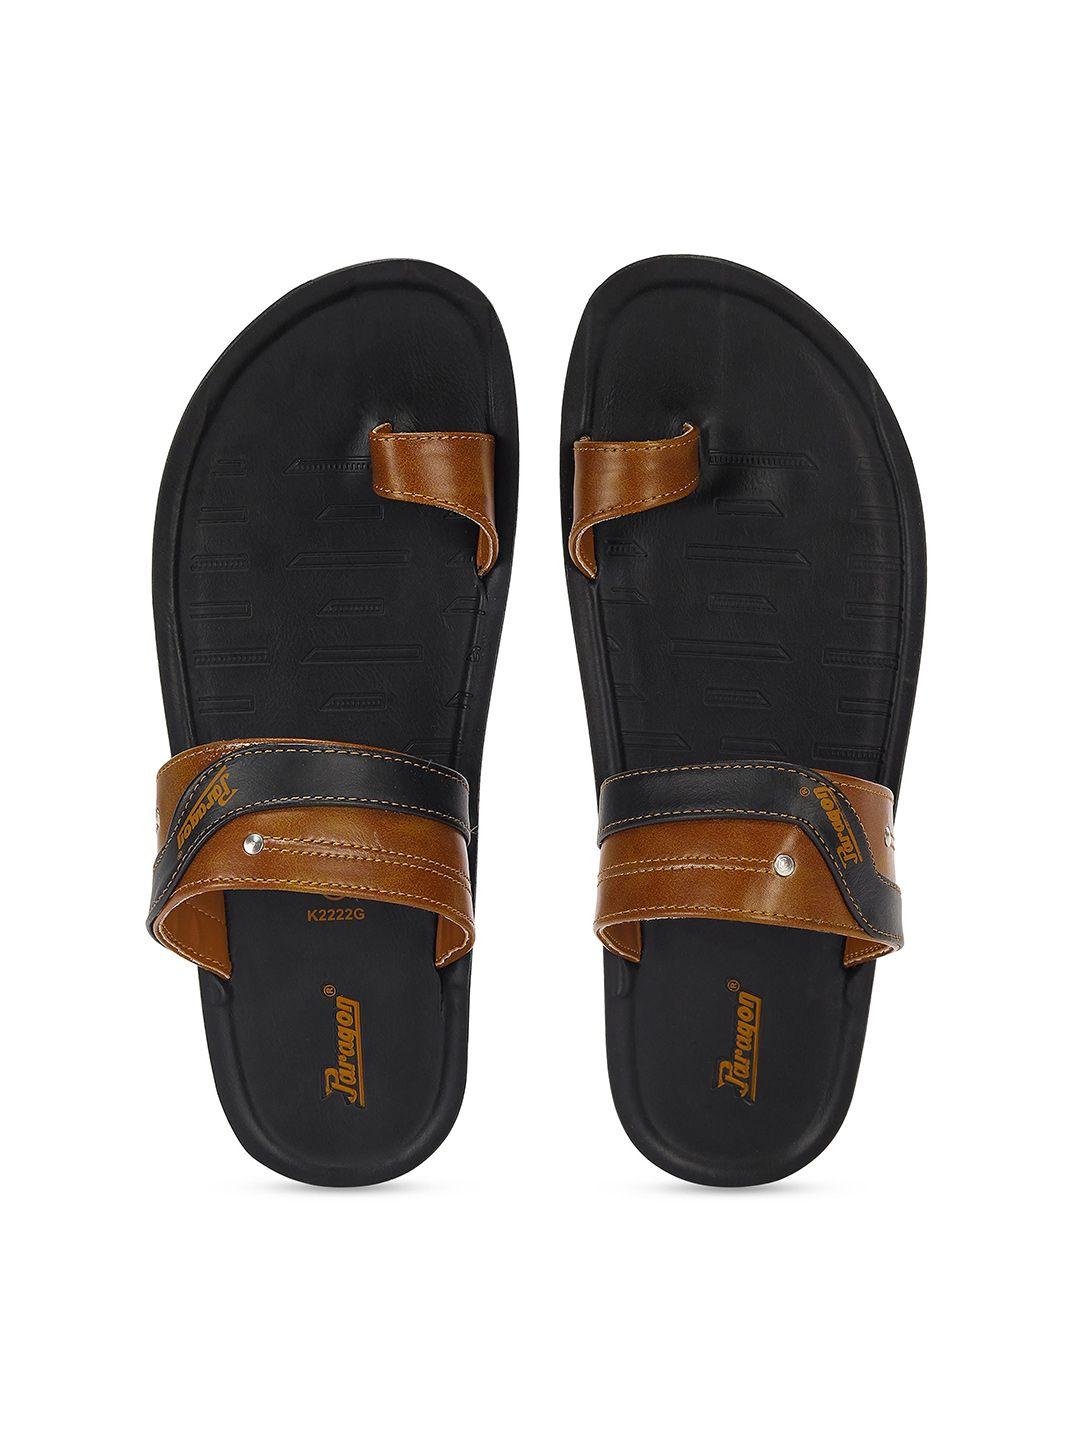 paragon-lightweight-anti-skid-comfort-sandals